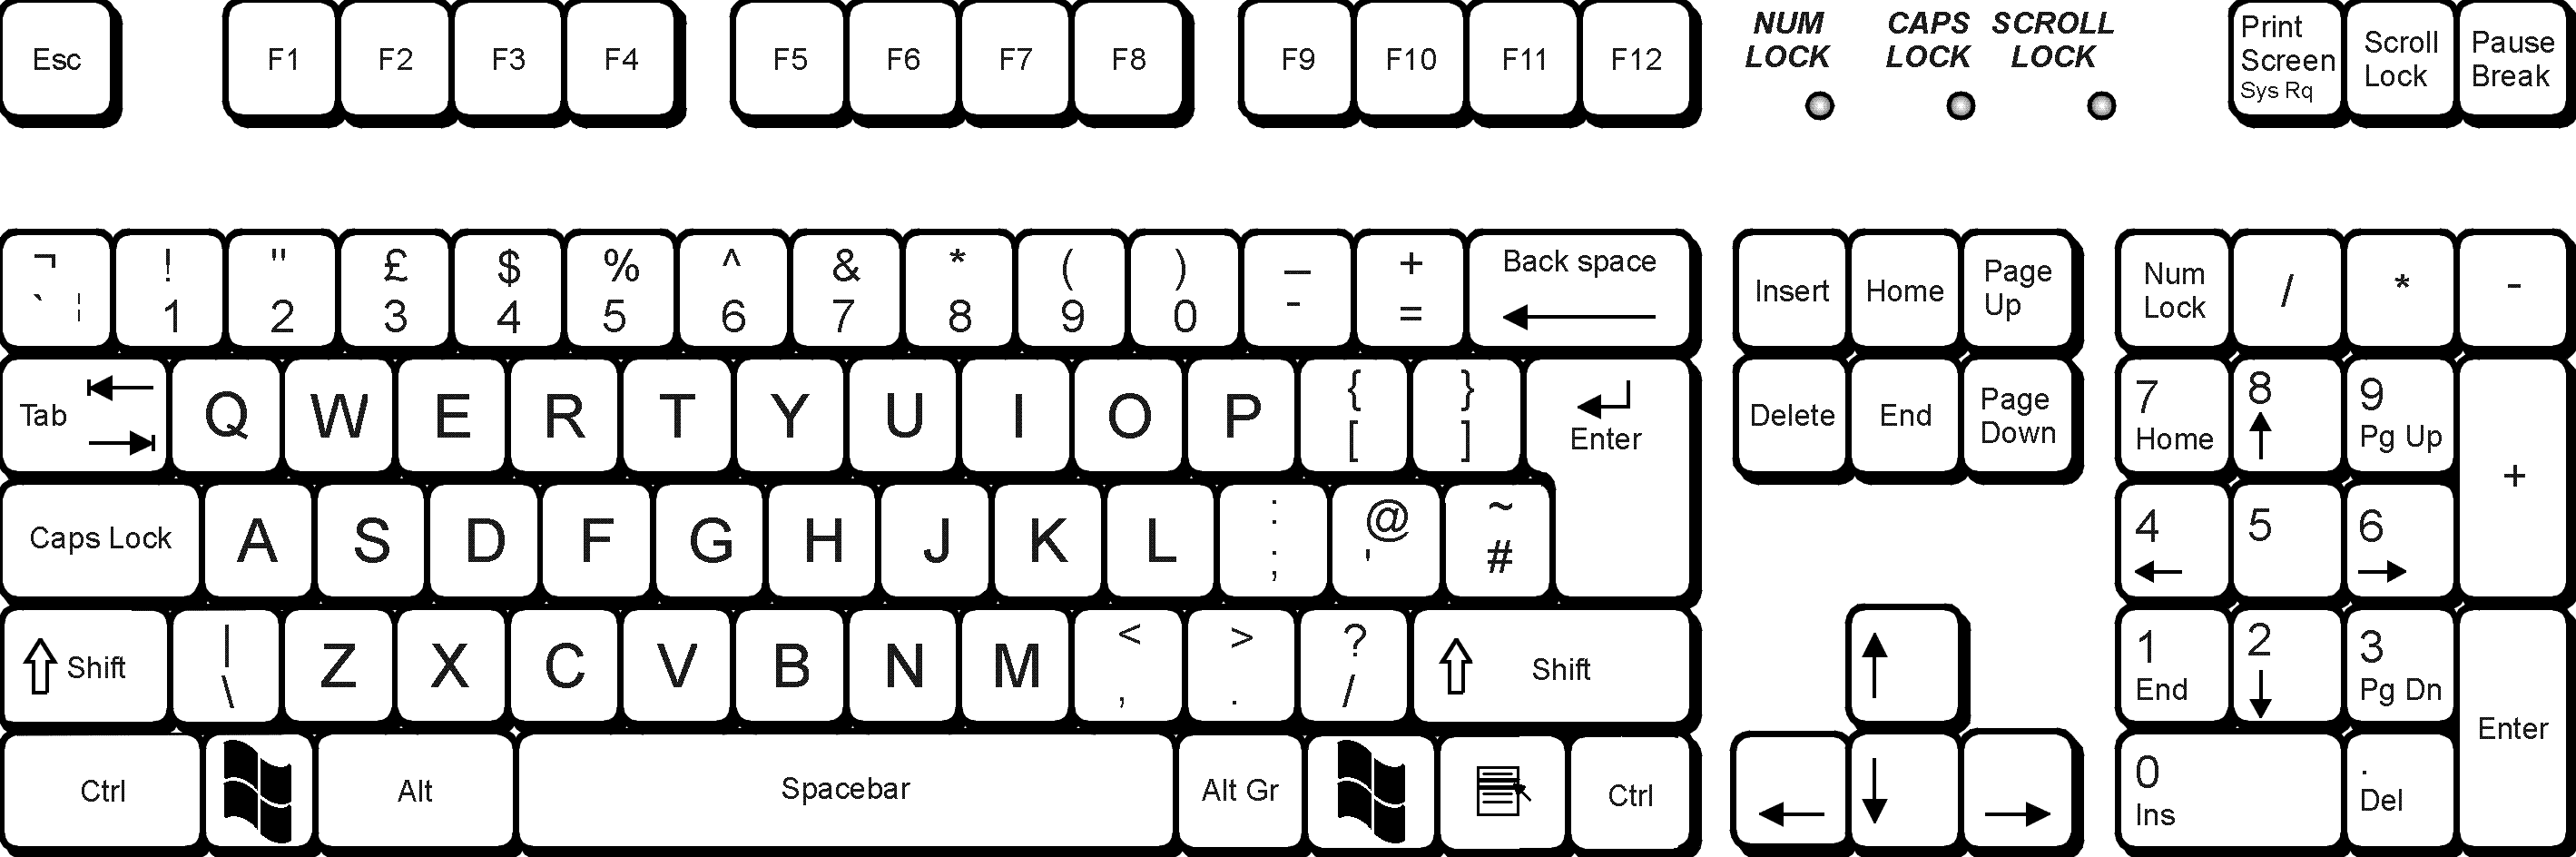 Free Printable Qwerty Keyboard Layout